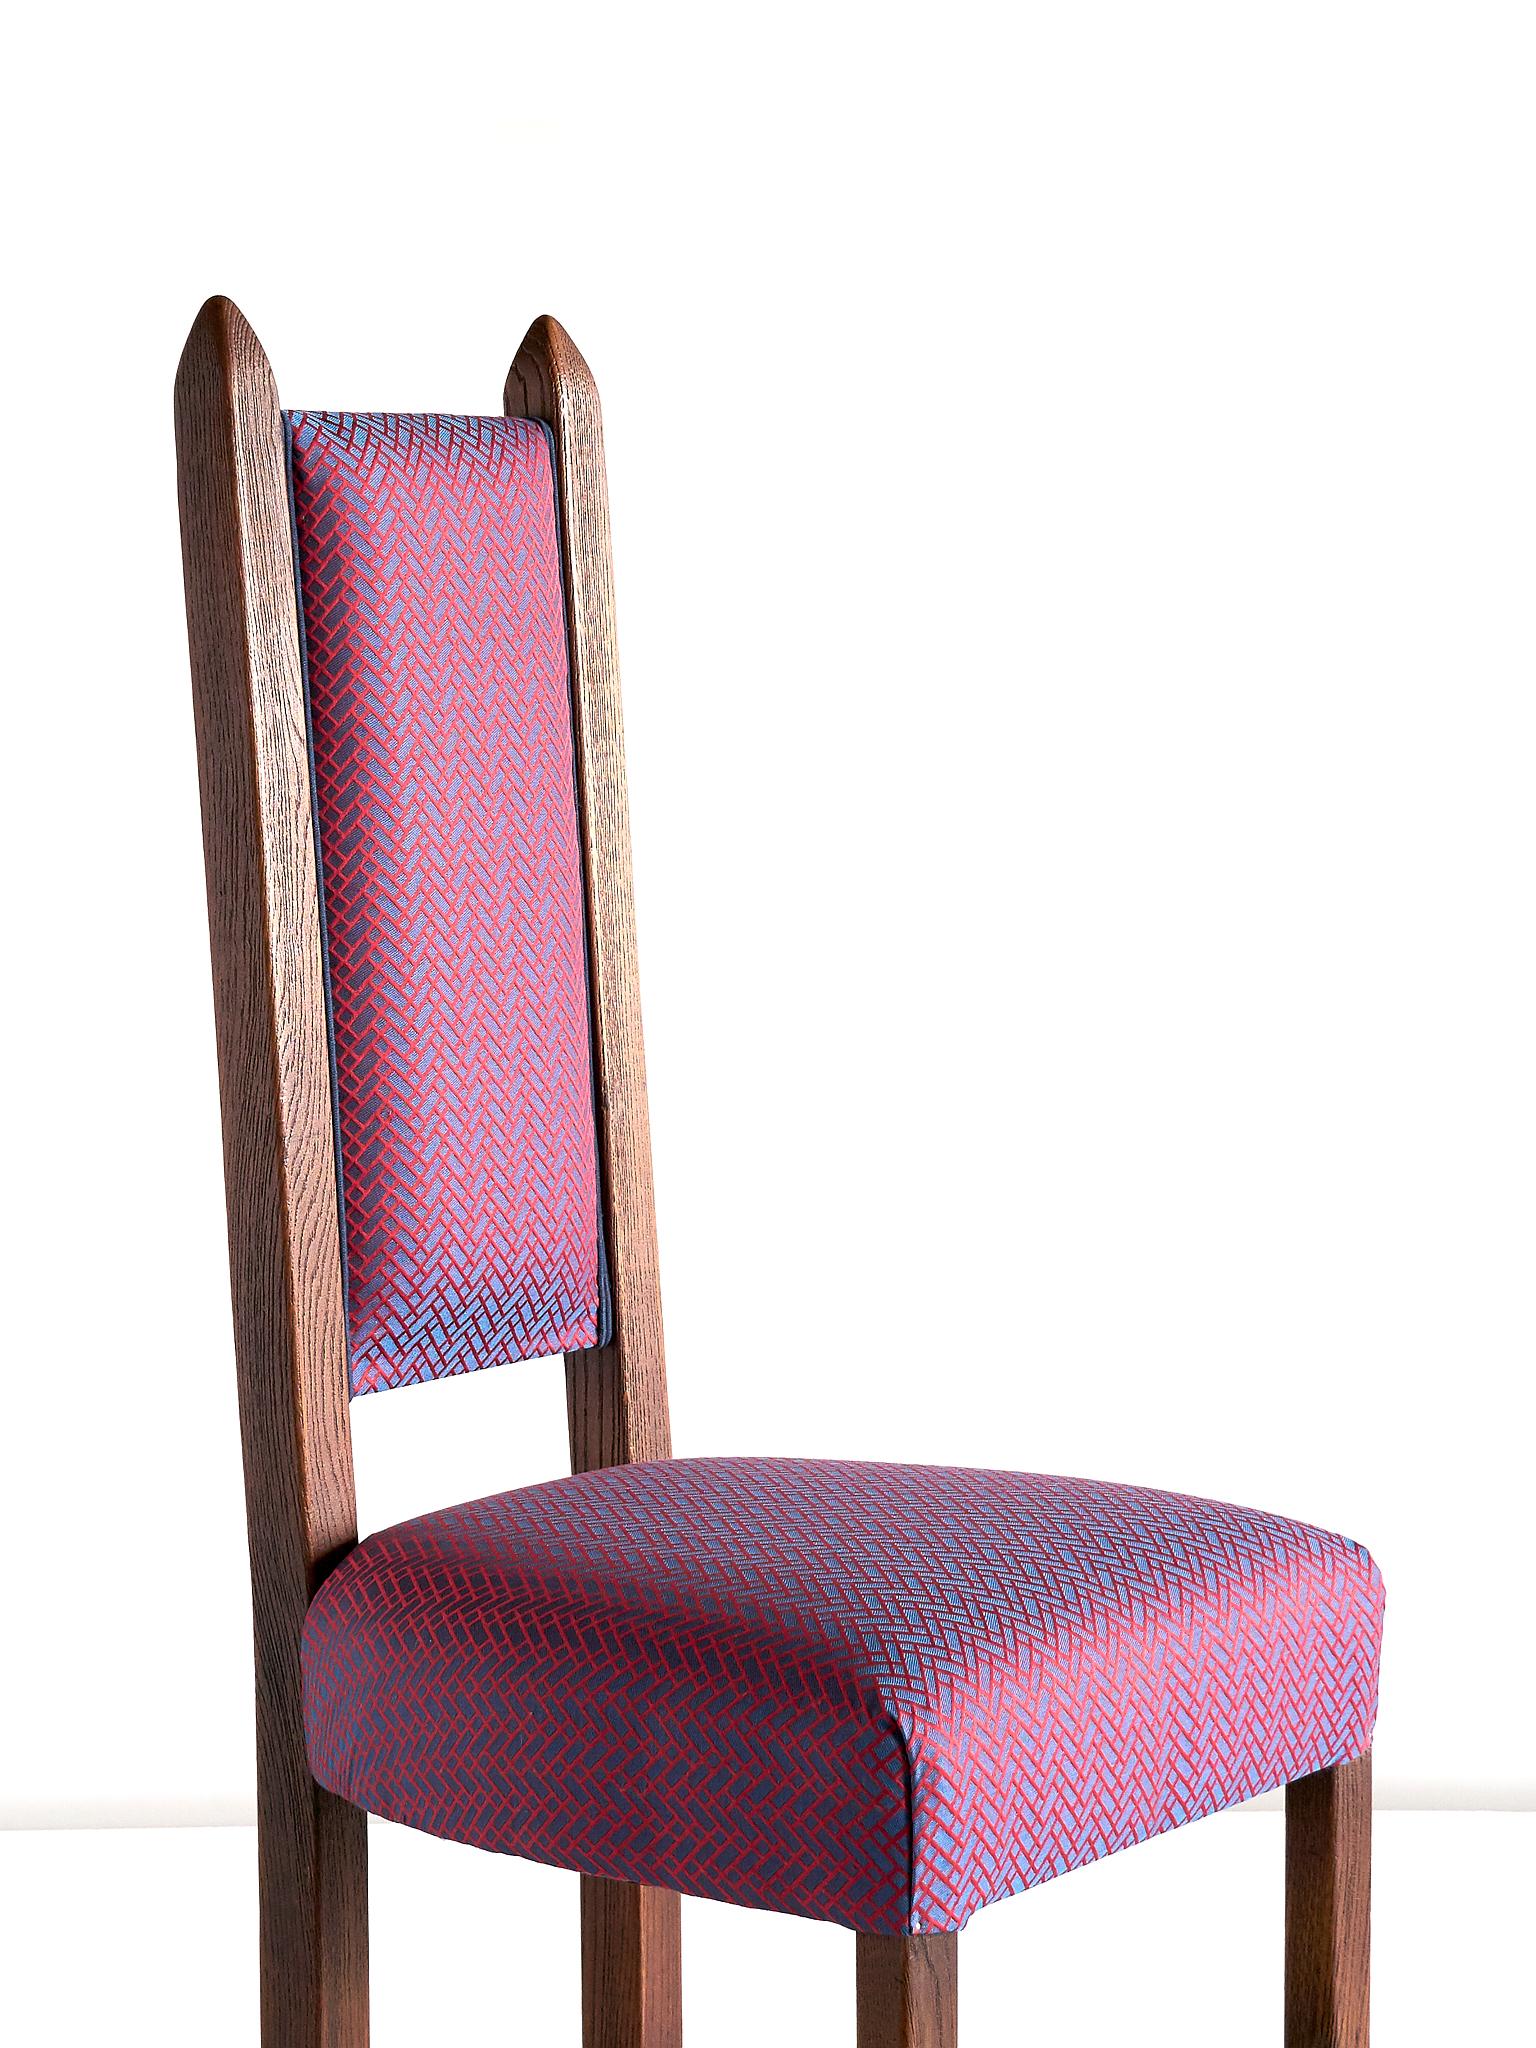 Dutch Set of Four Amsterdam School Chairs in Oak and Hermès Jacquard Fabric, 1920s